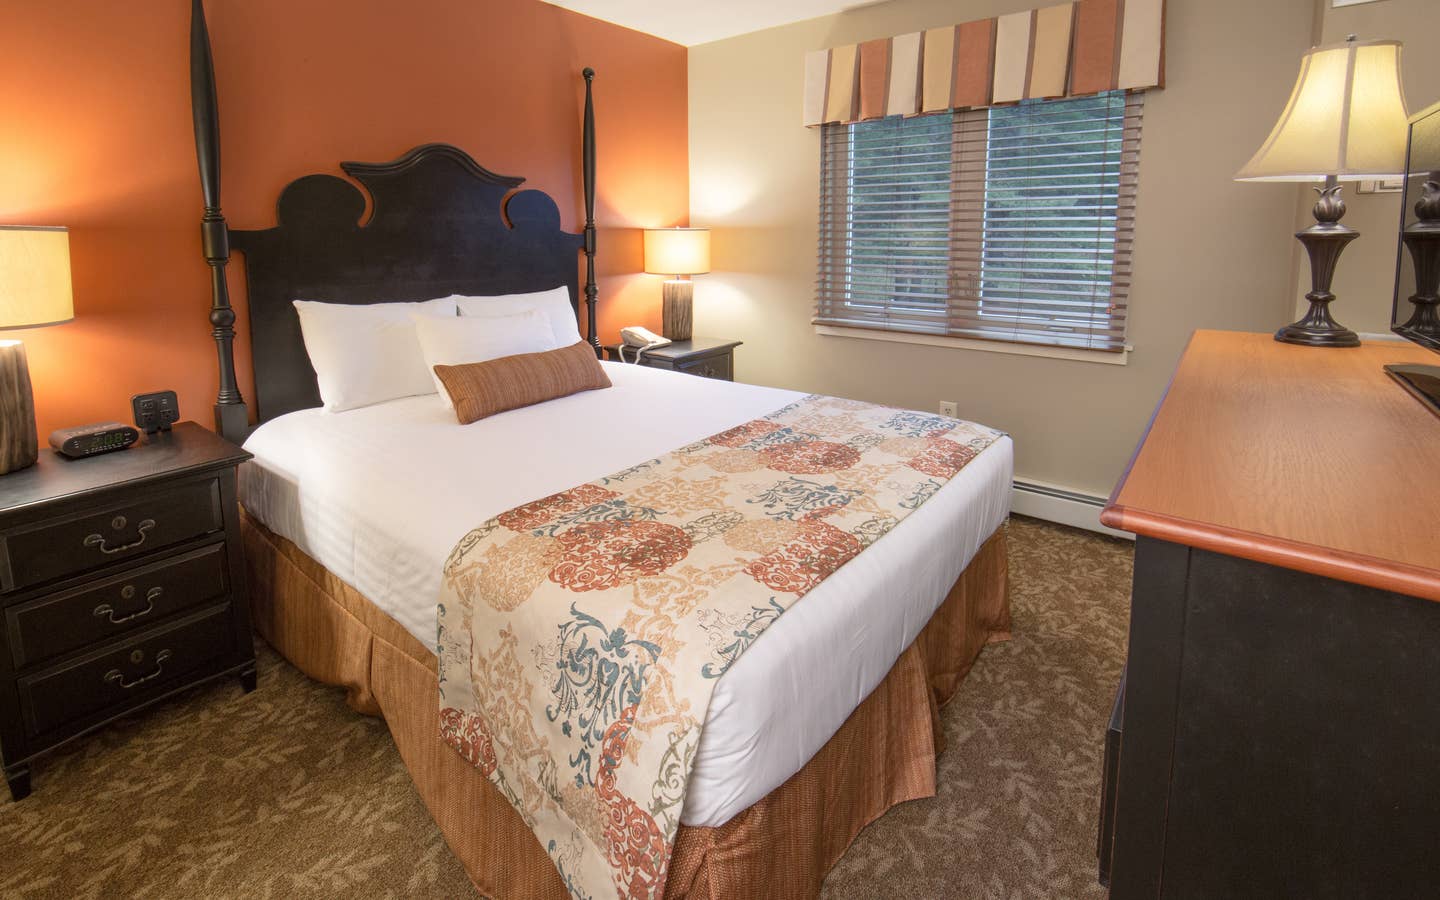 Guest bedroom in a two-bedroom villa at Mount Ascutney Resort in Brownsville, VT